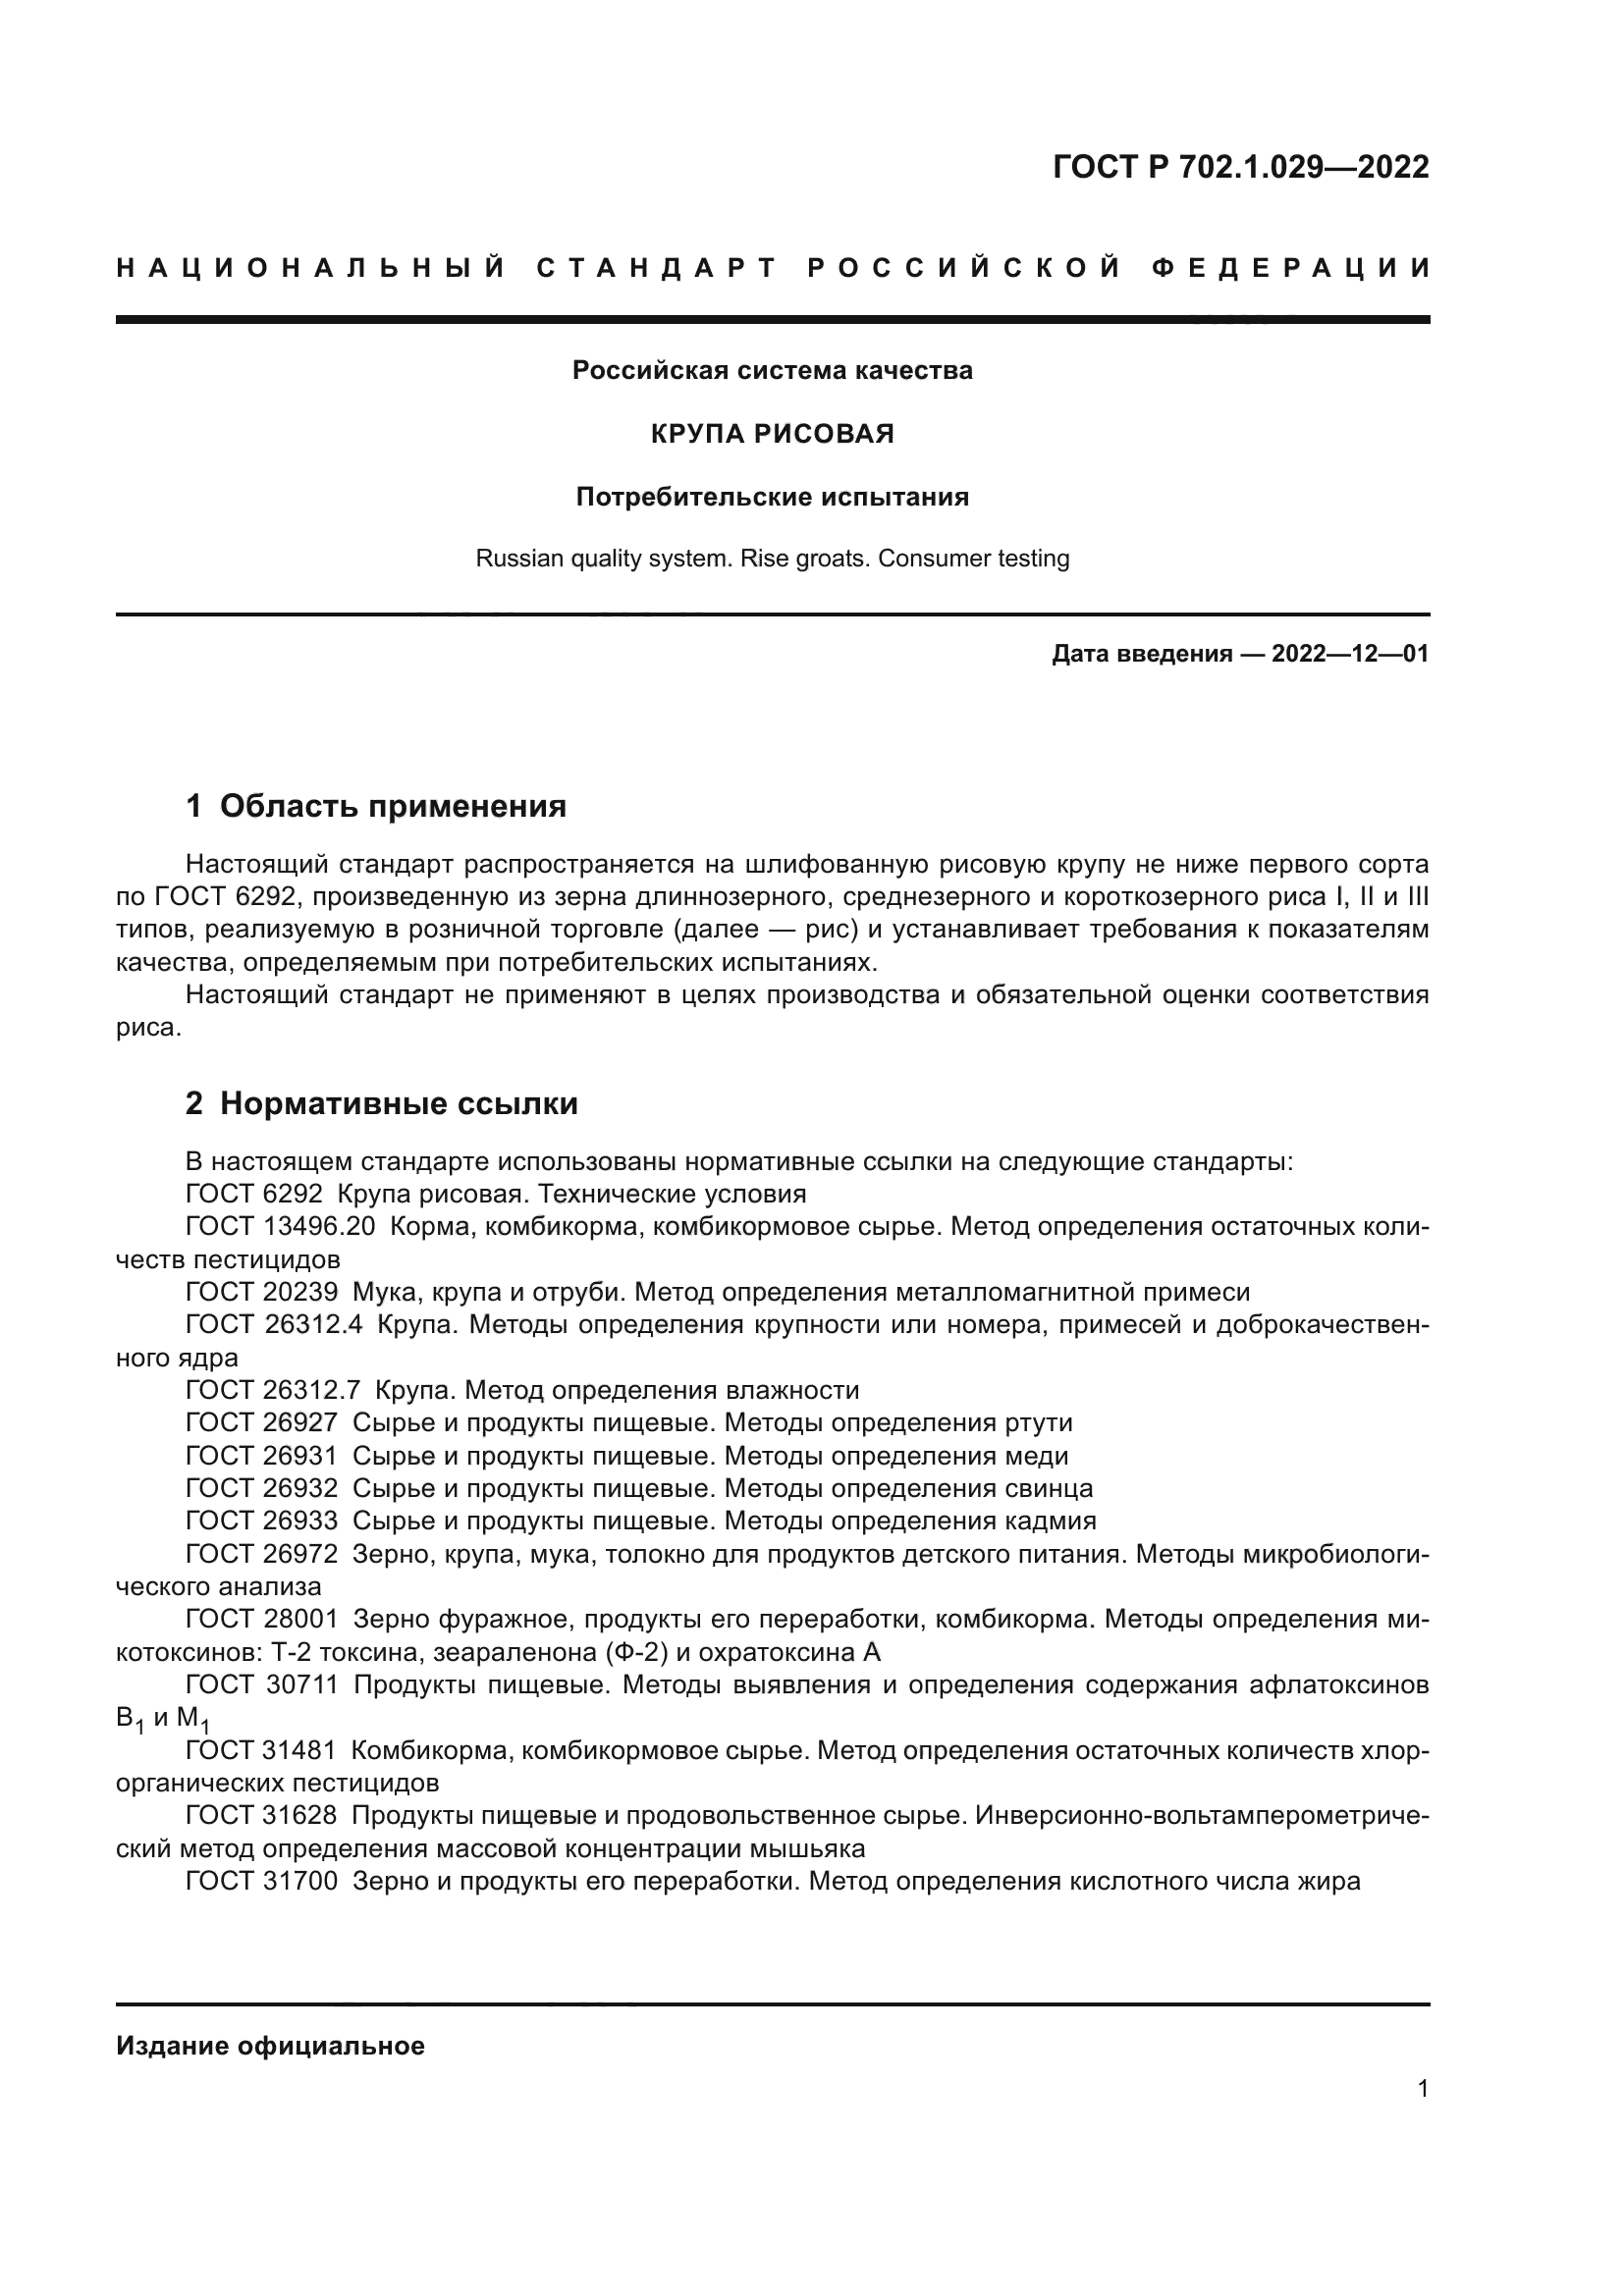 ГОСТ Р 702.1.029-2022